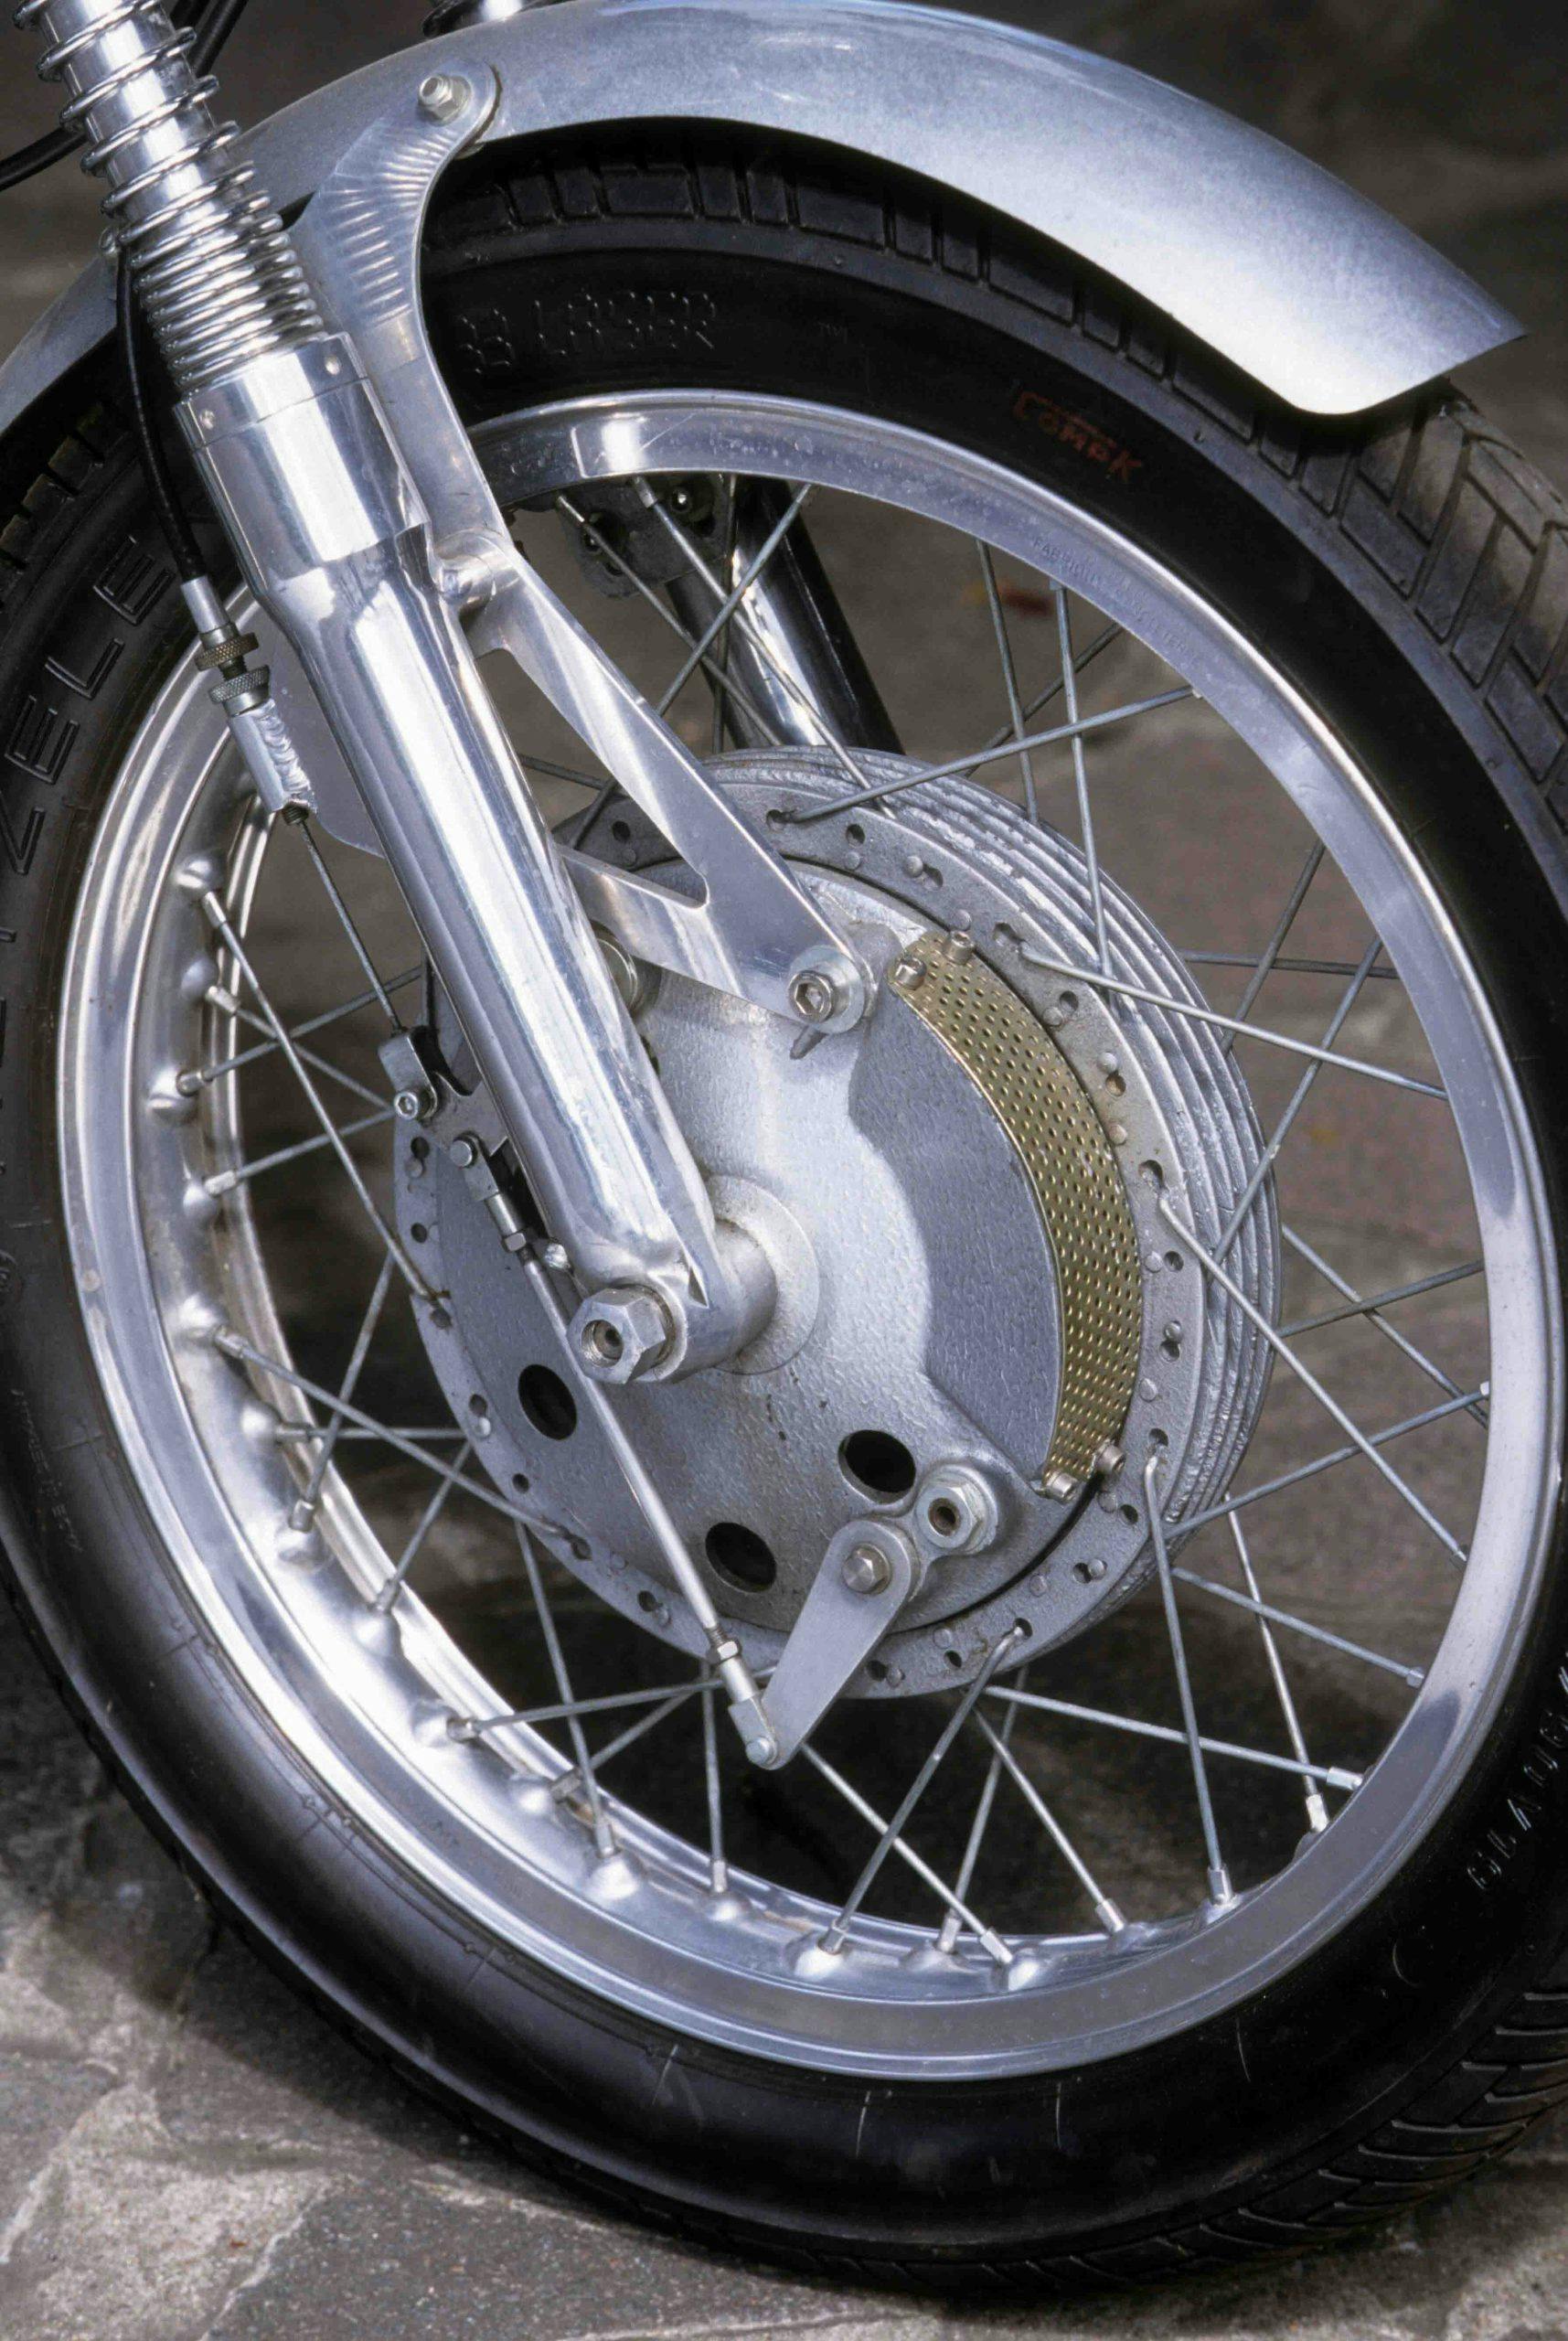 1965 Dresda Triton front wheel vertical